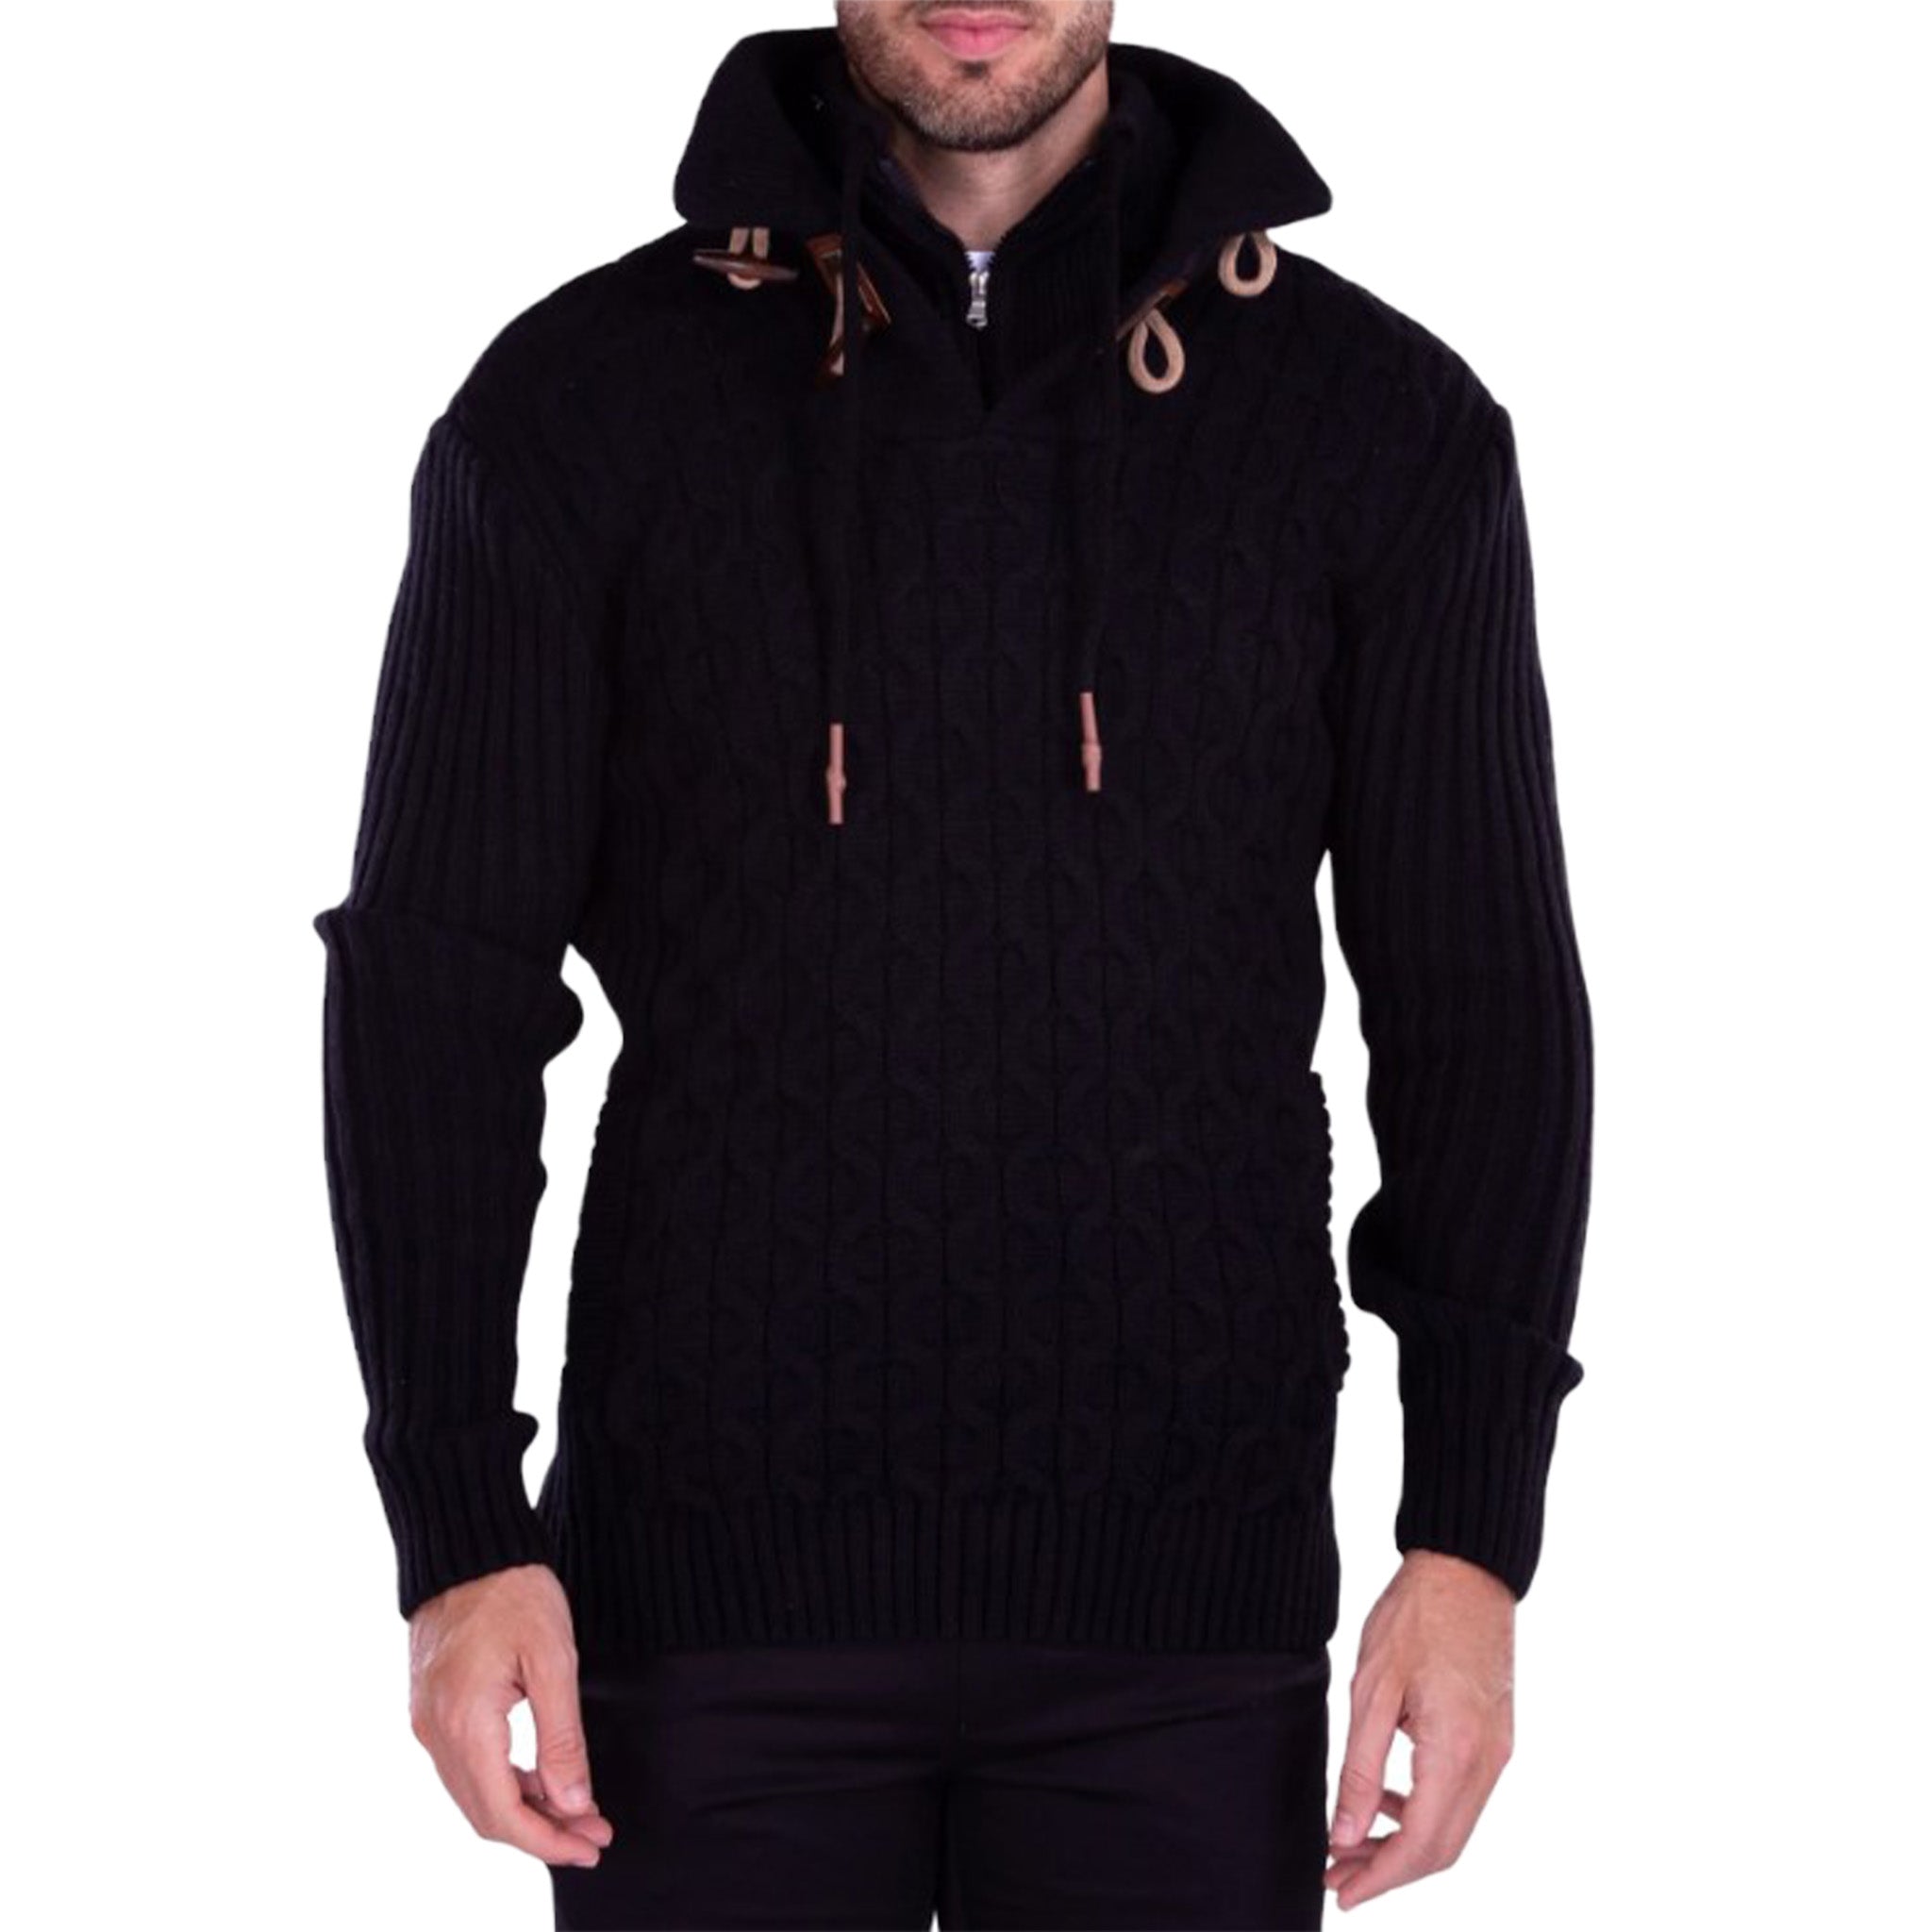 Black Cowl Neck Men's Sweater